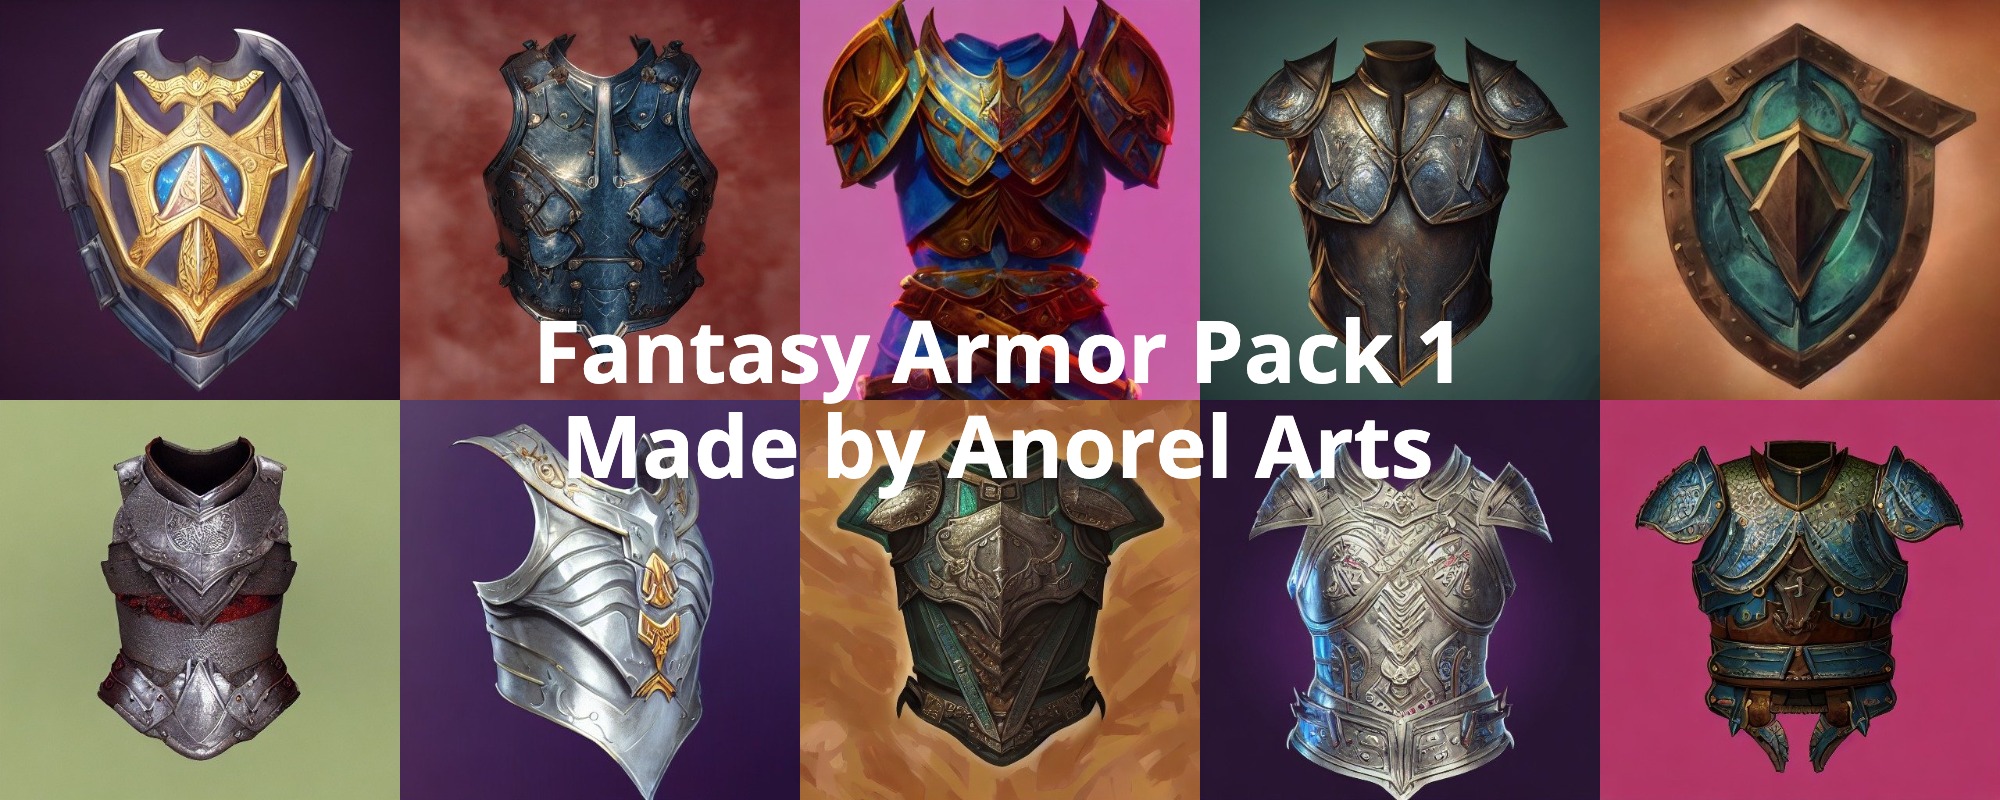 Fantasy Armor Pack 1